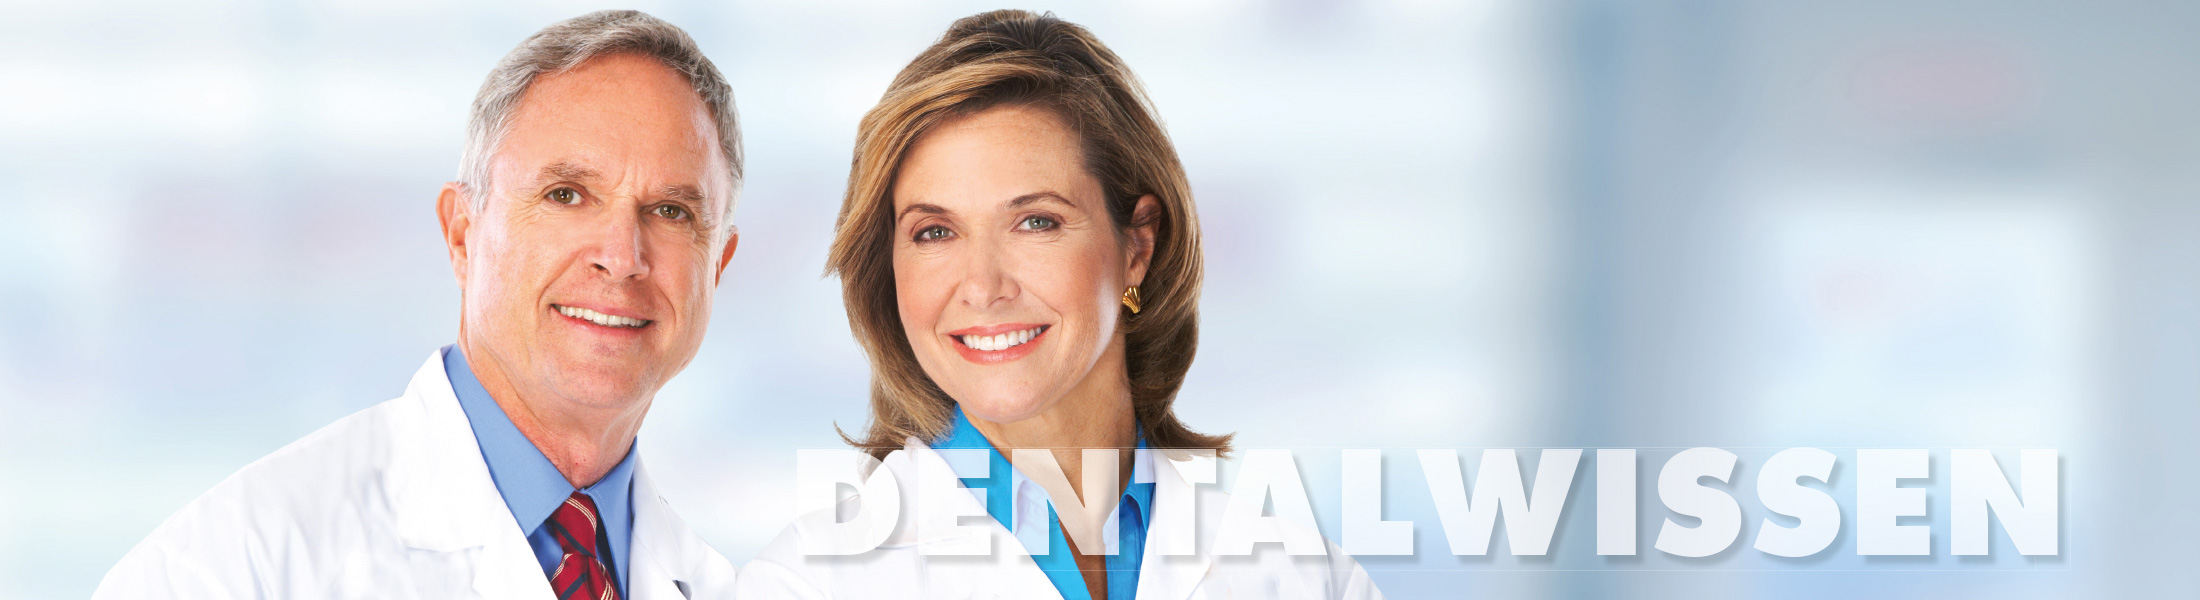 Dentalwissen-Behandlung-Karies 